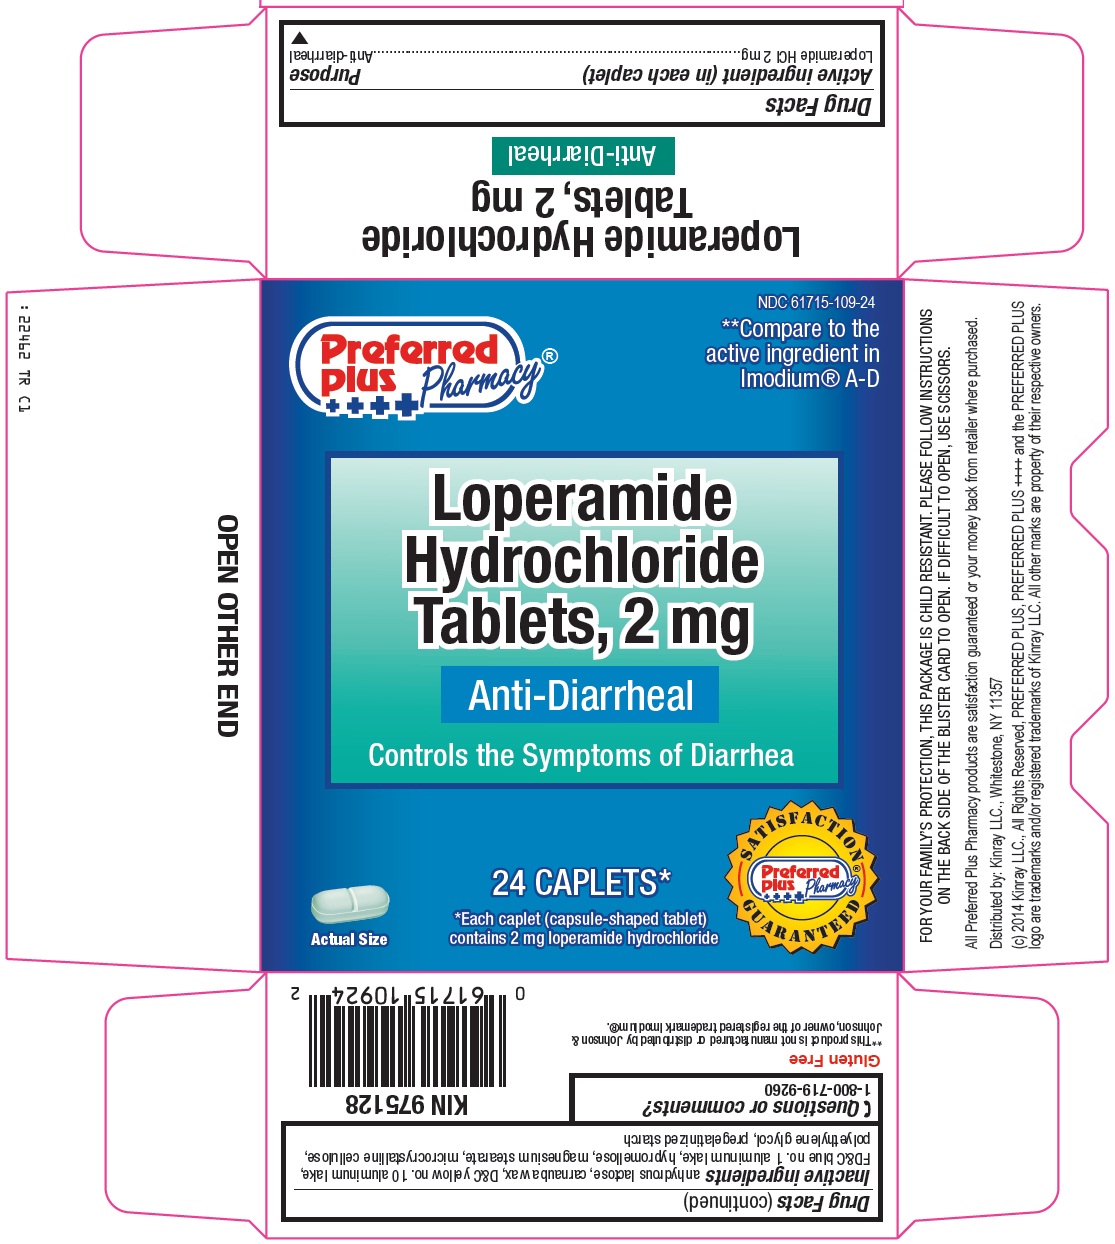 Preferred Plus Pharmacy Loperamide Hydrochloride Tablets